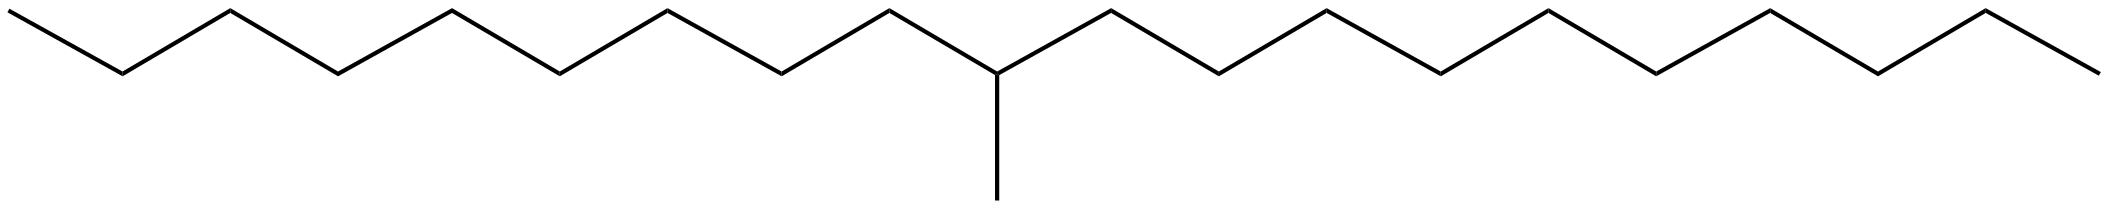 Image of eicosane, 10-methyl-